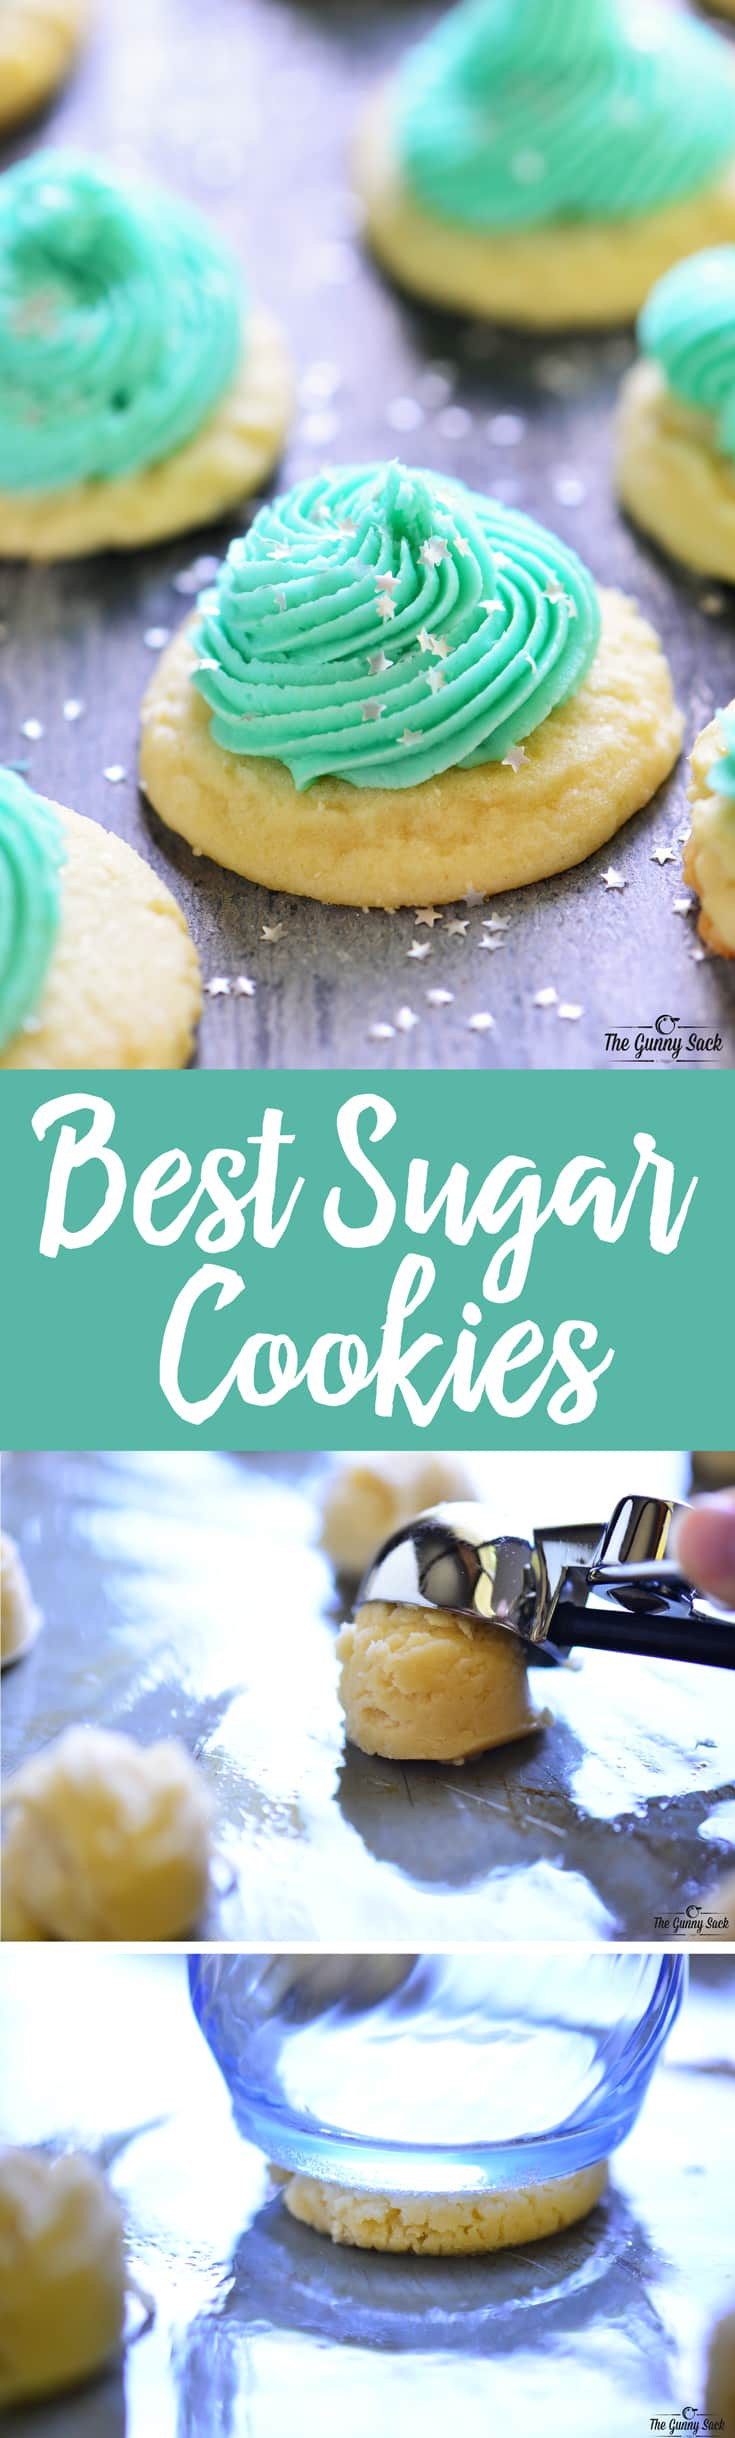 Best Sugar Cookies Recipe
 Best Sugar Cookie Recipe The Gunny Sack